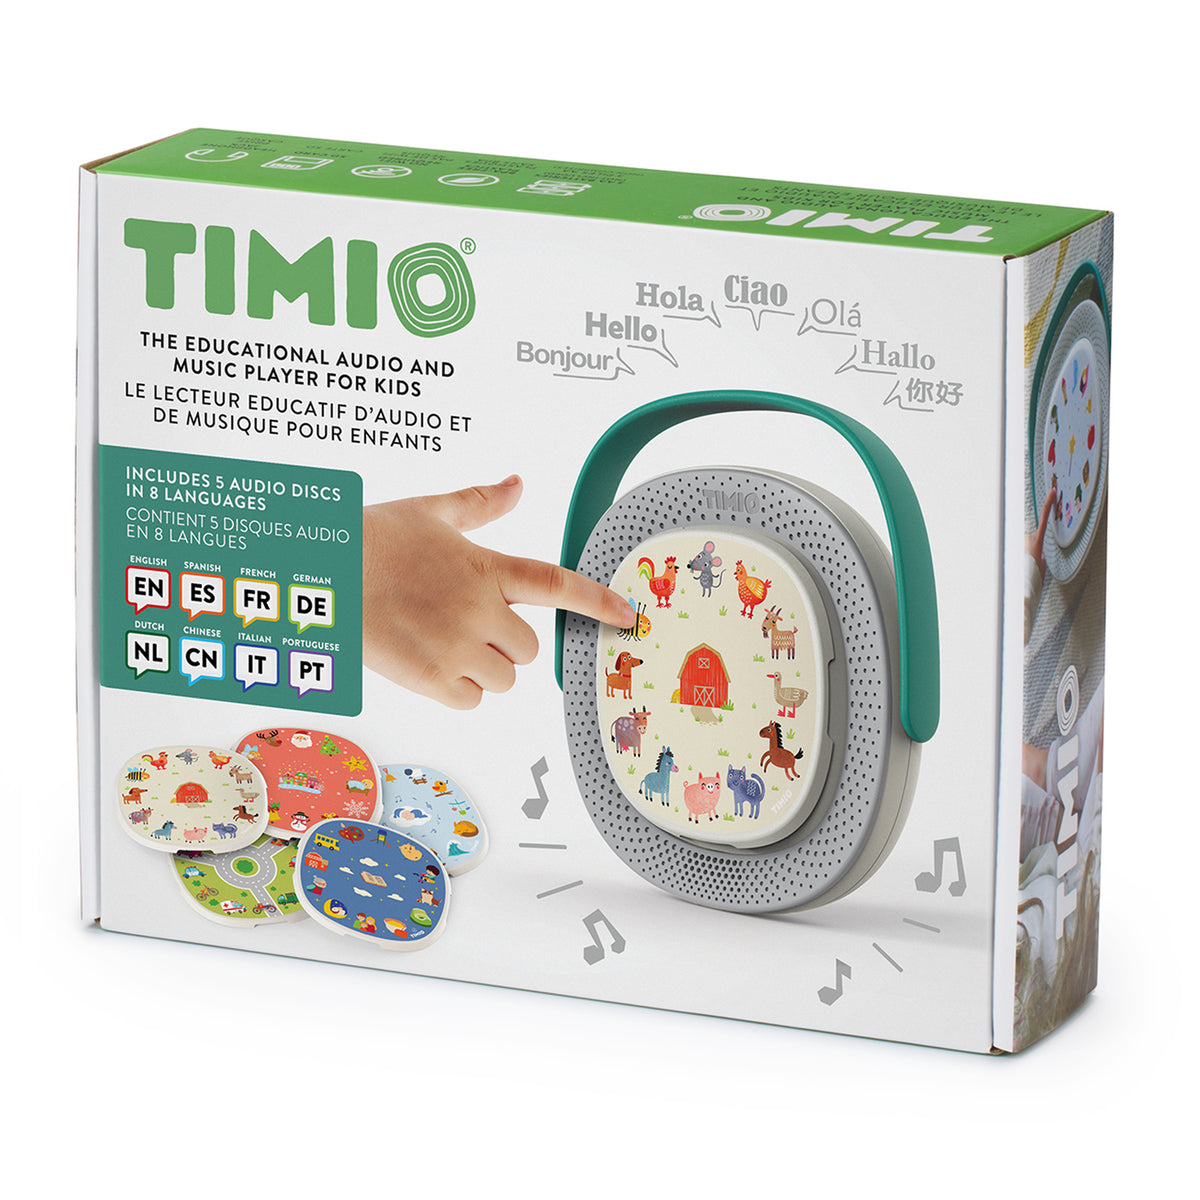 TIMIO PLAYER WITH 5 DISCS IN 8 LANGUAGES: Disc Set 1 audio content(5)